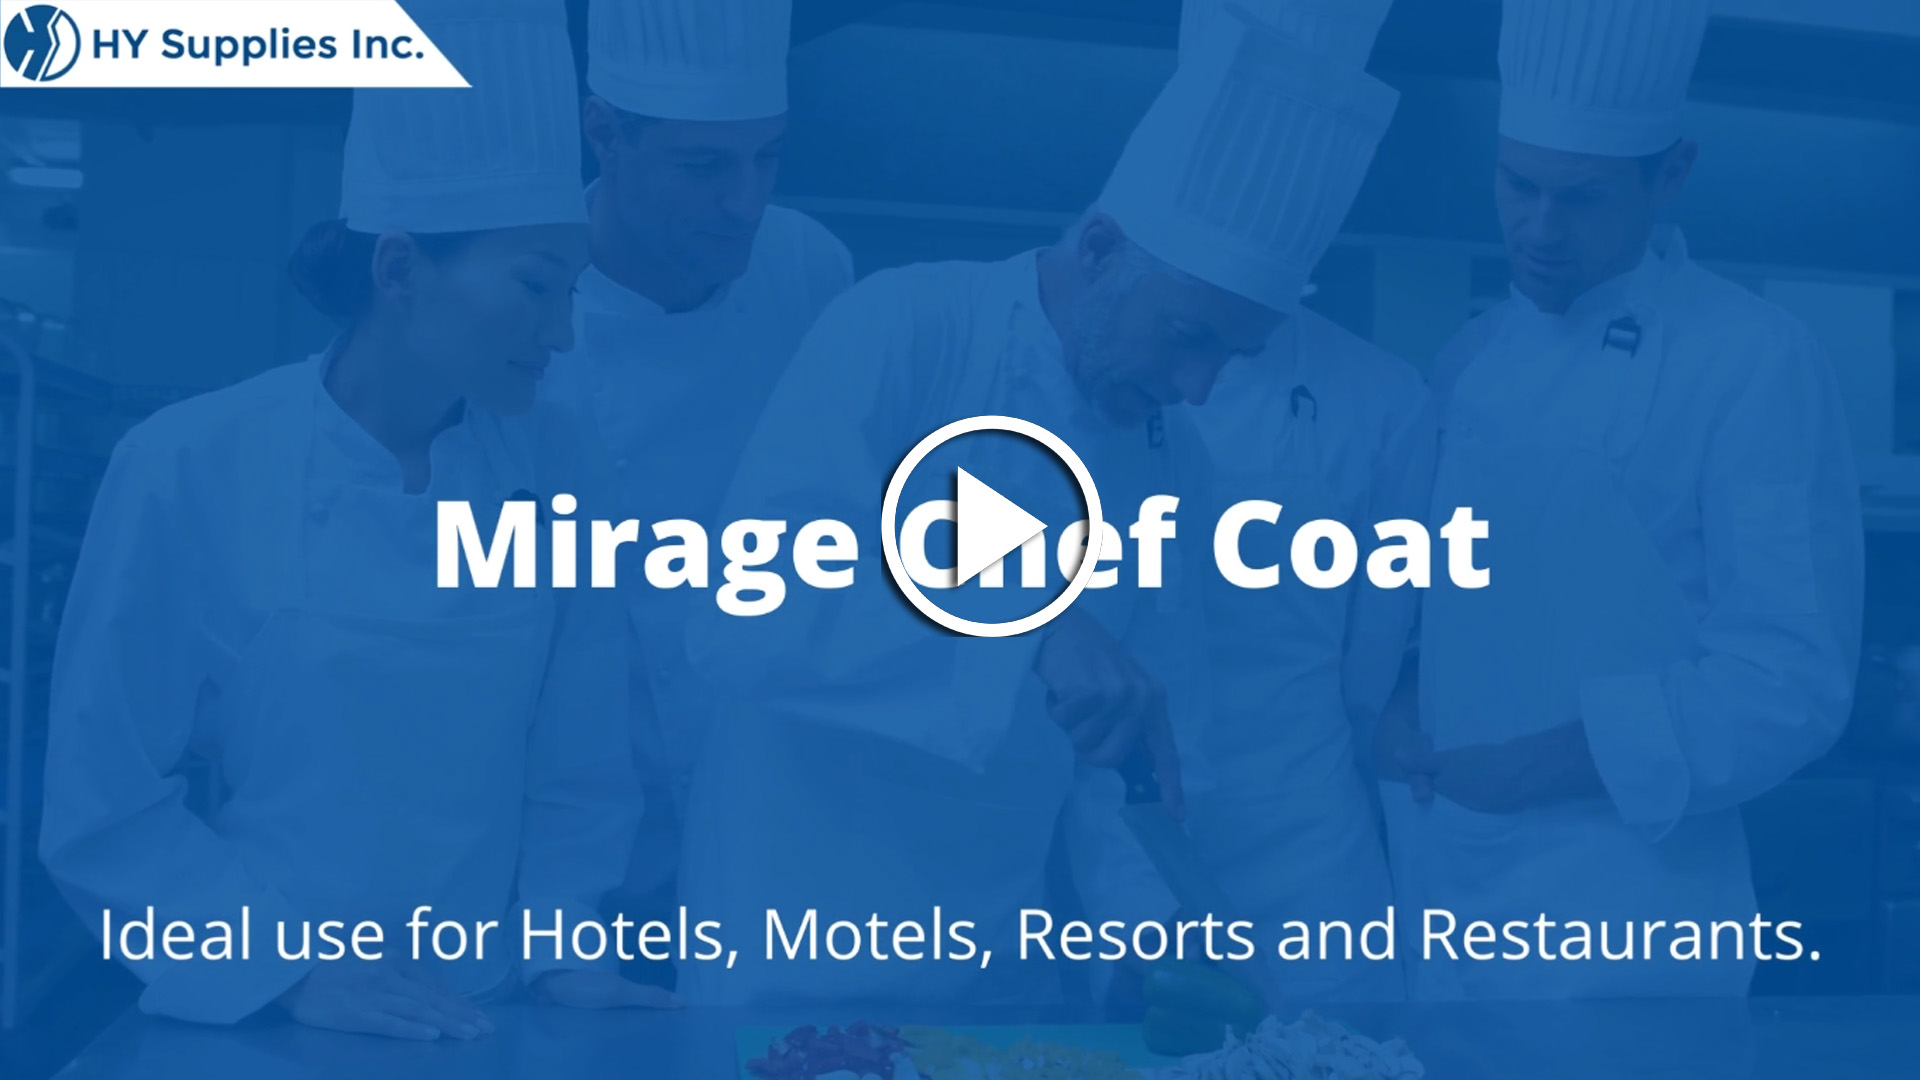 Mirage Chef coat	